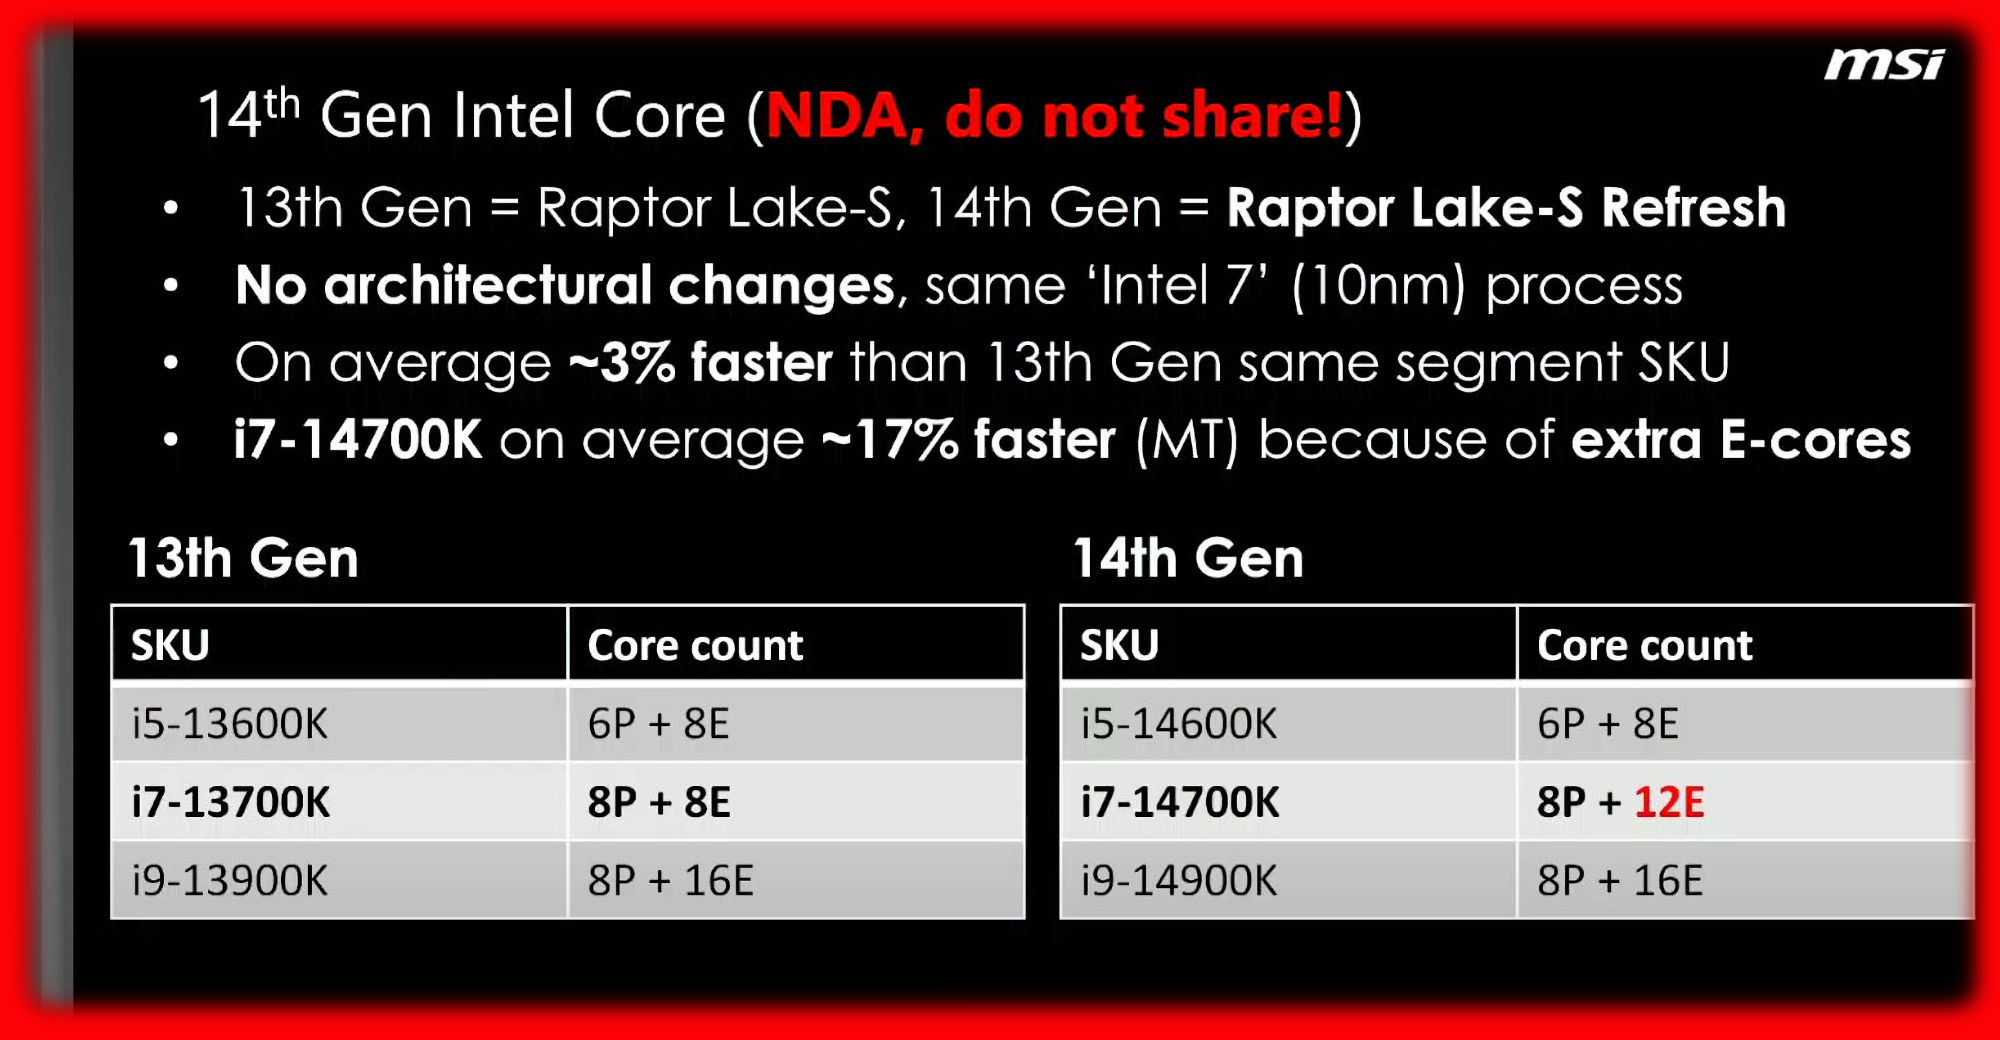 MSI leaks Intel 14th Gen Core specs, confirms it’s 3% faster on average than 13th Gen – VideoCardz.com